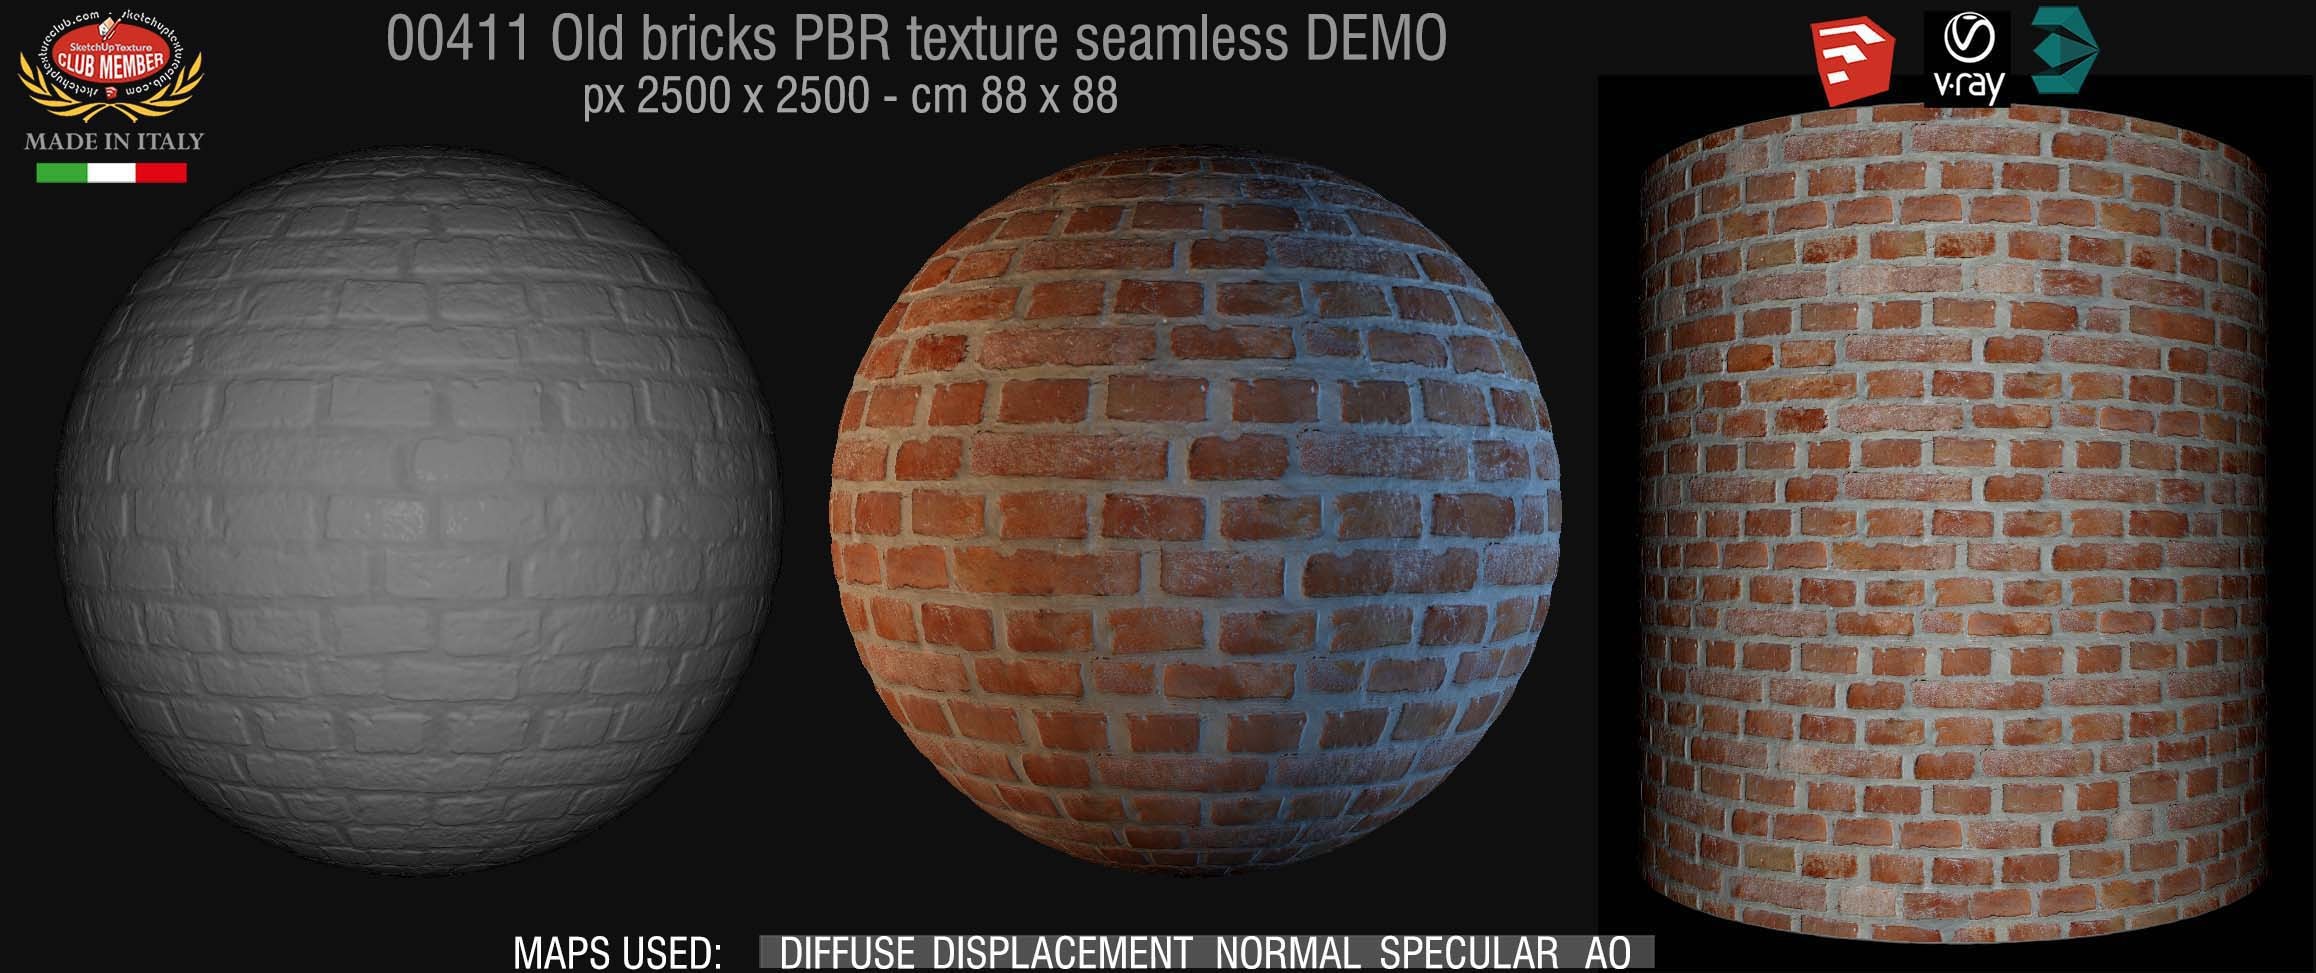 00411 Old bricks PBR texture seamless DEMO